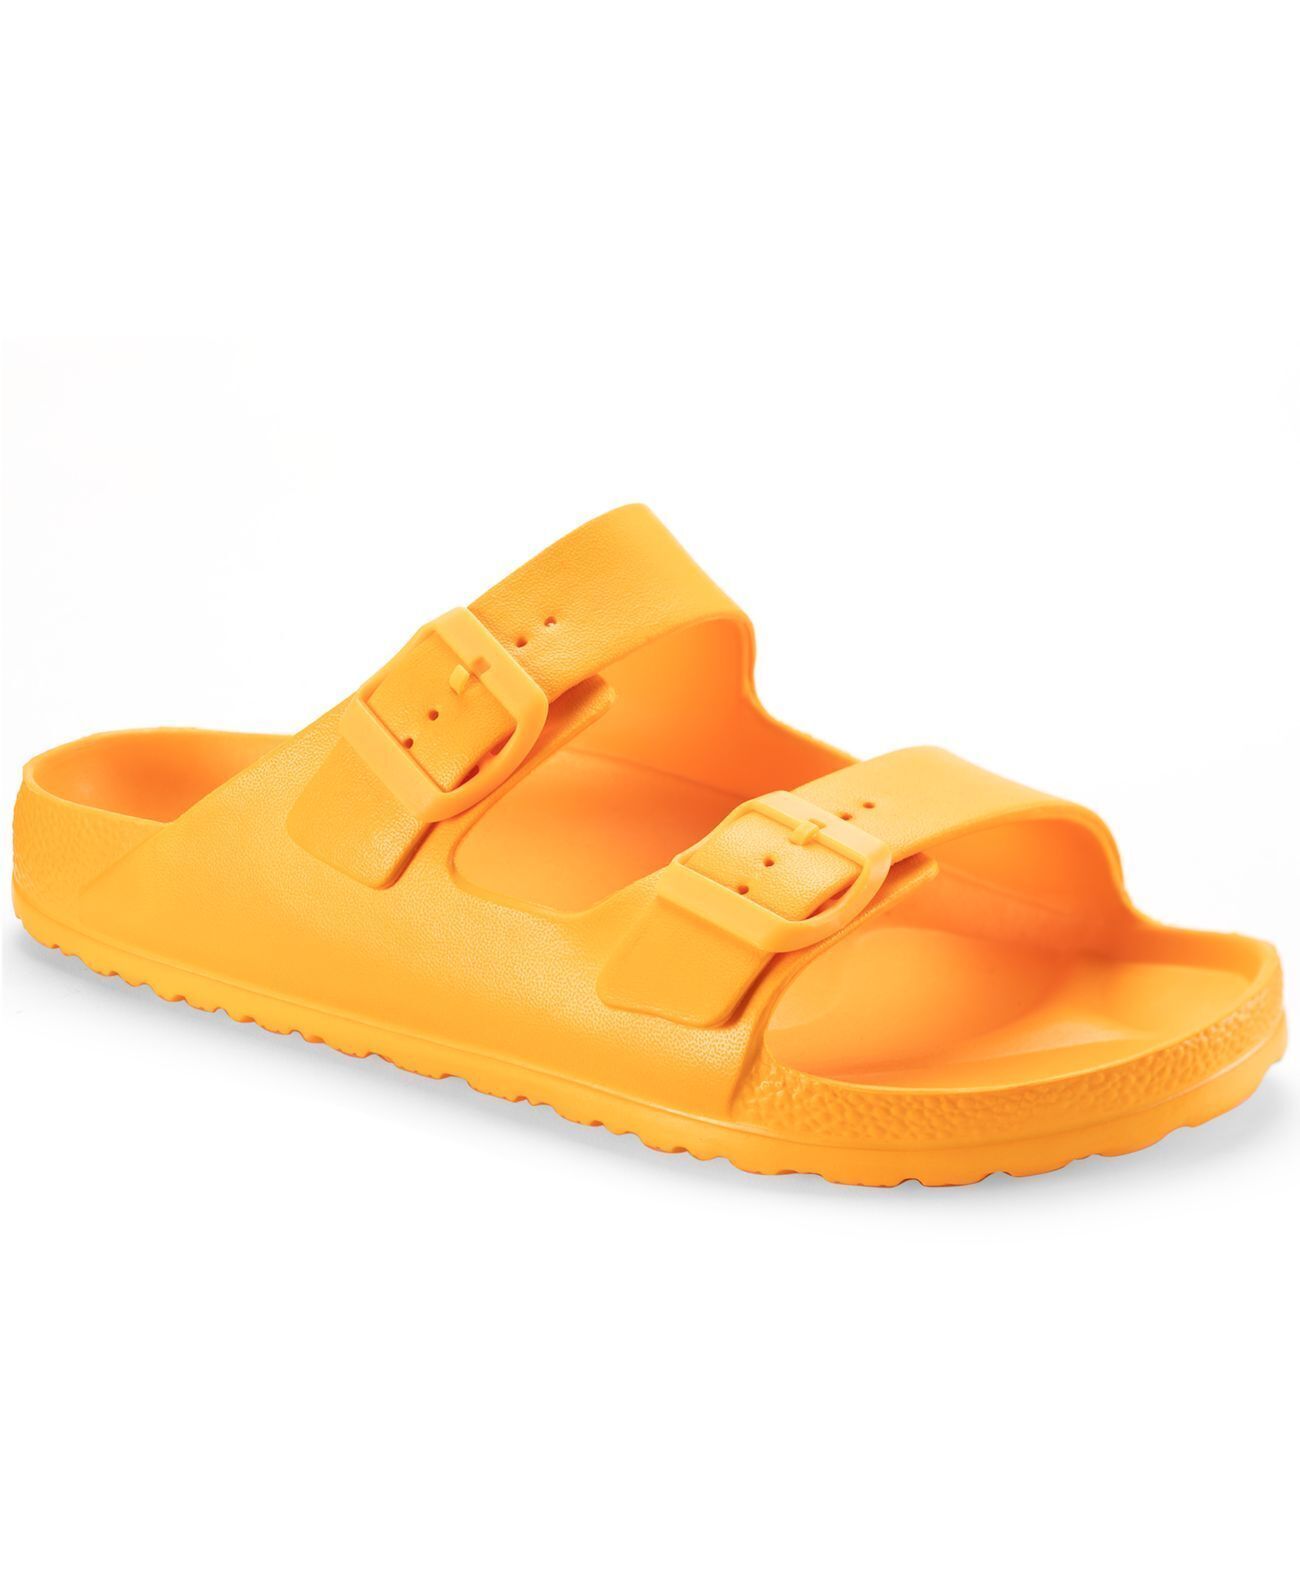 Primary image for Sun + Stone Mens Jude Slip-On Sandals,Orange,12 M